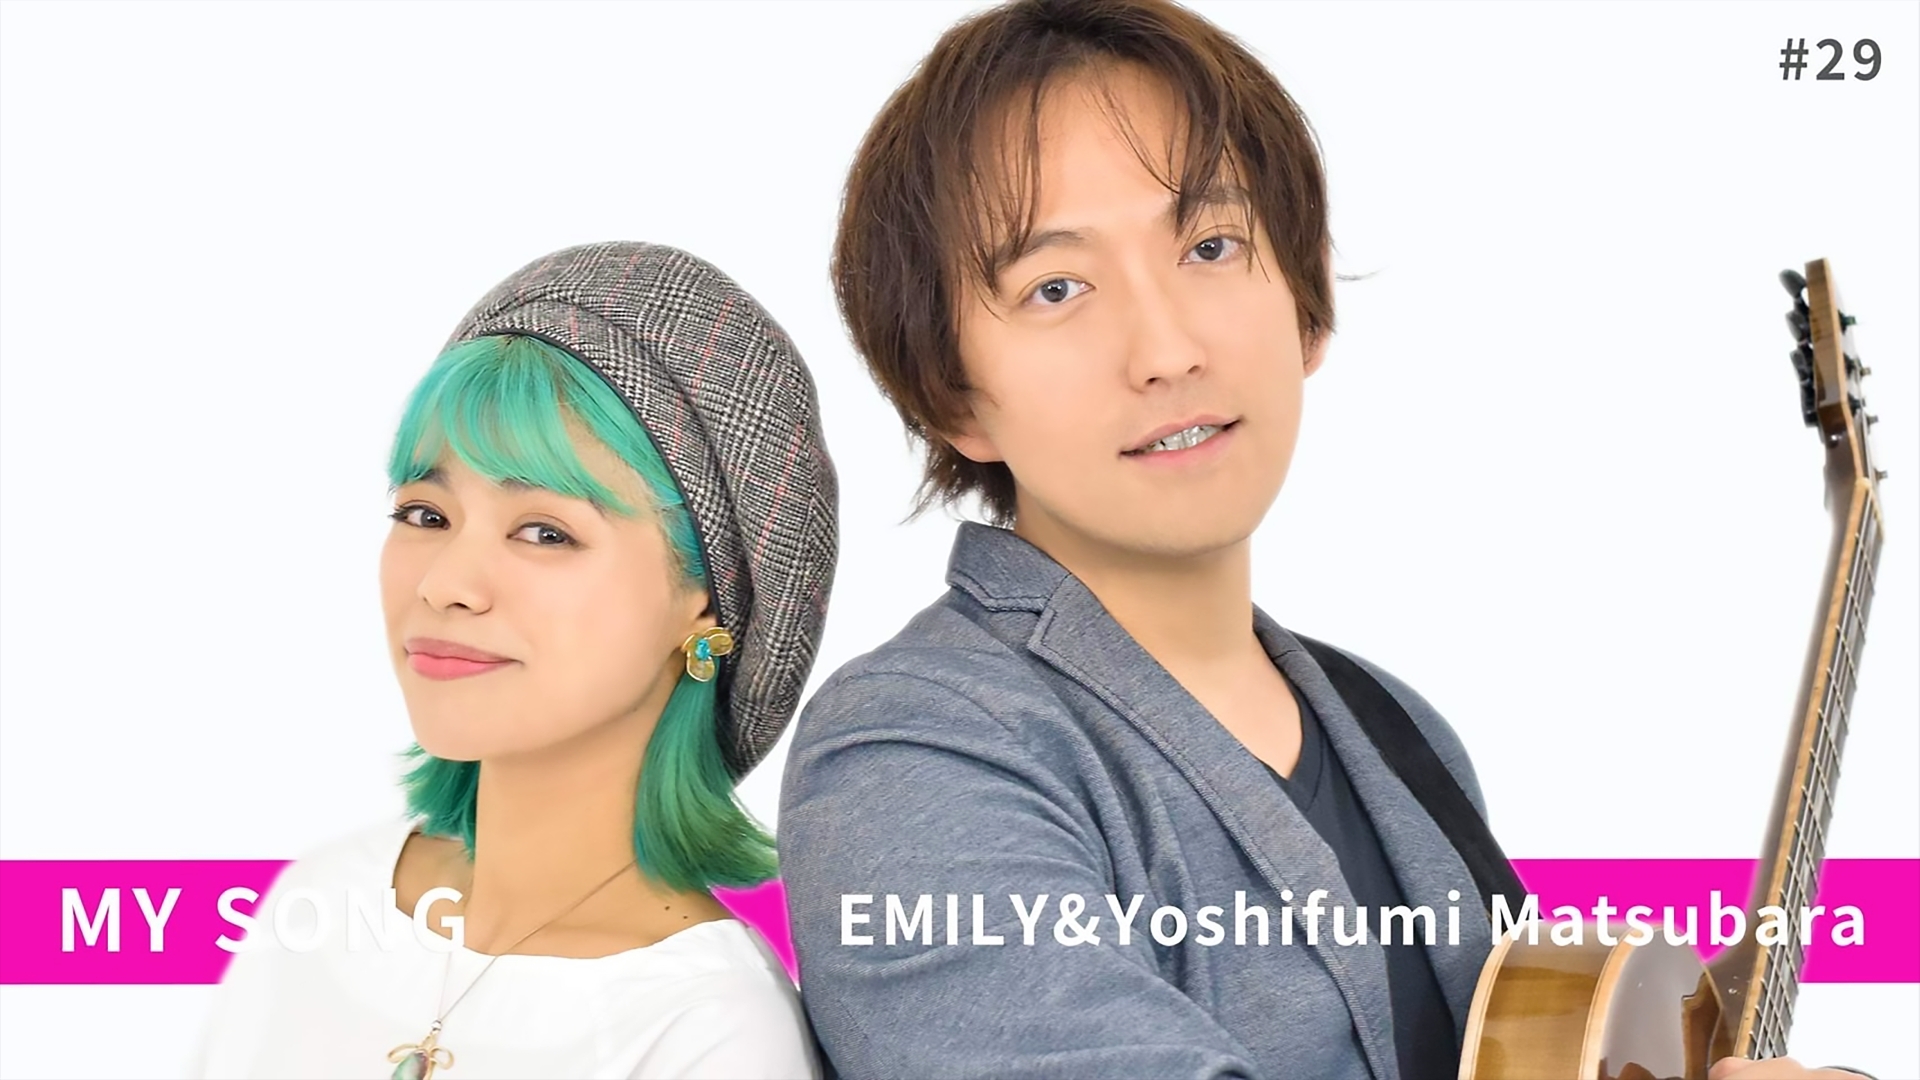 MY SONG - EMILY & Yoshifumi Matsubara / When You Wish Up on A Star